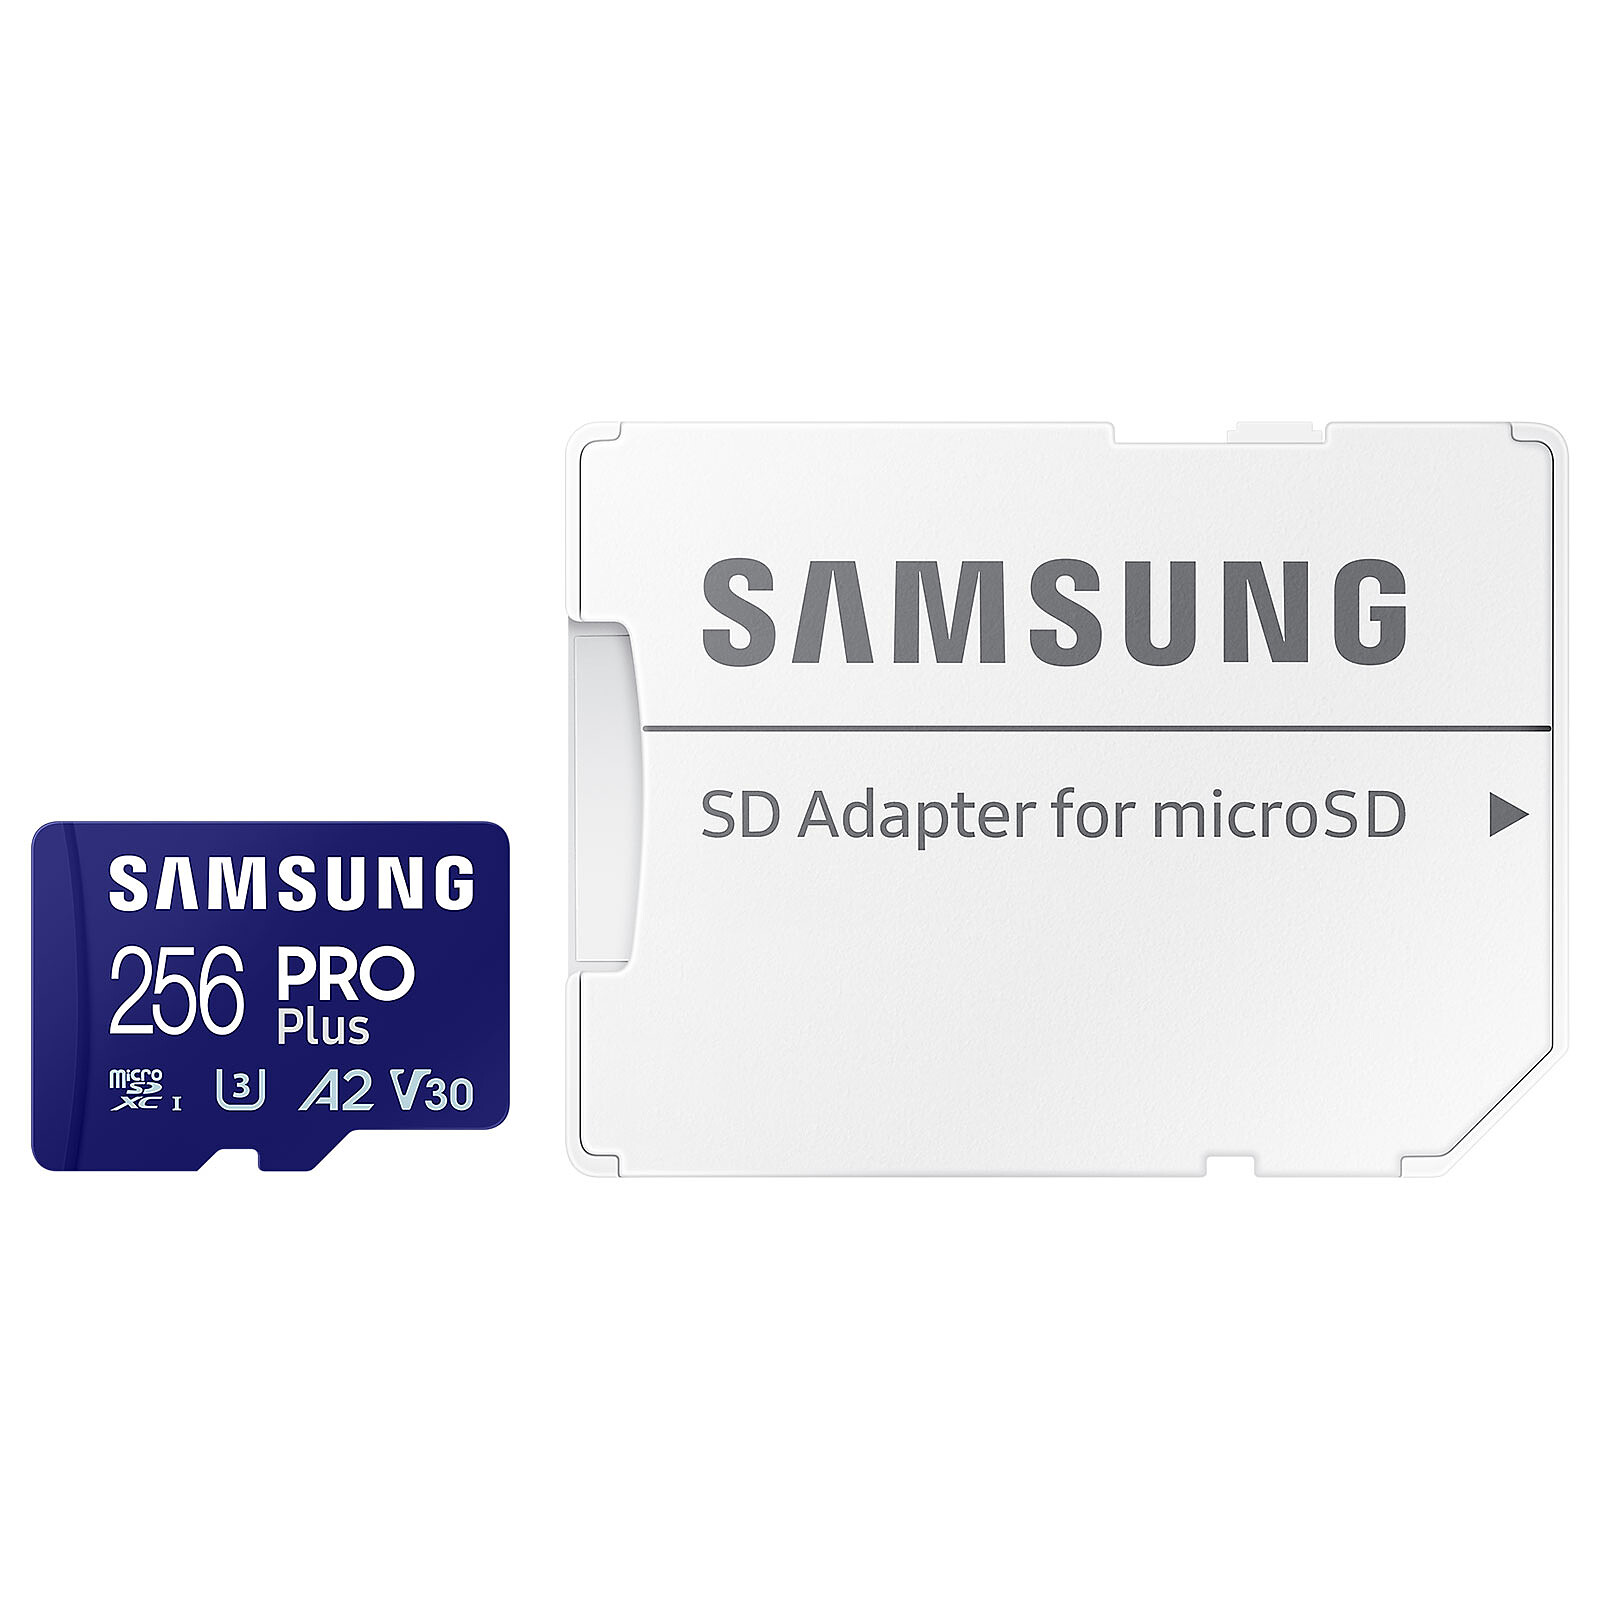 La carte microSD SanDisk Extreme Pro 256 Go chute